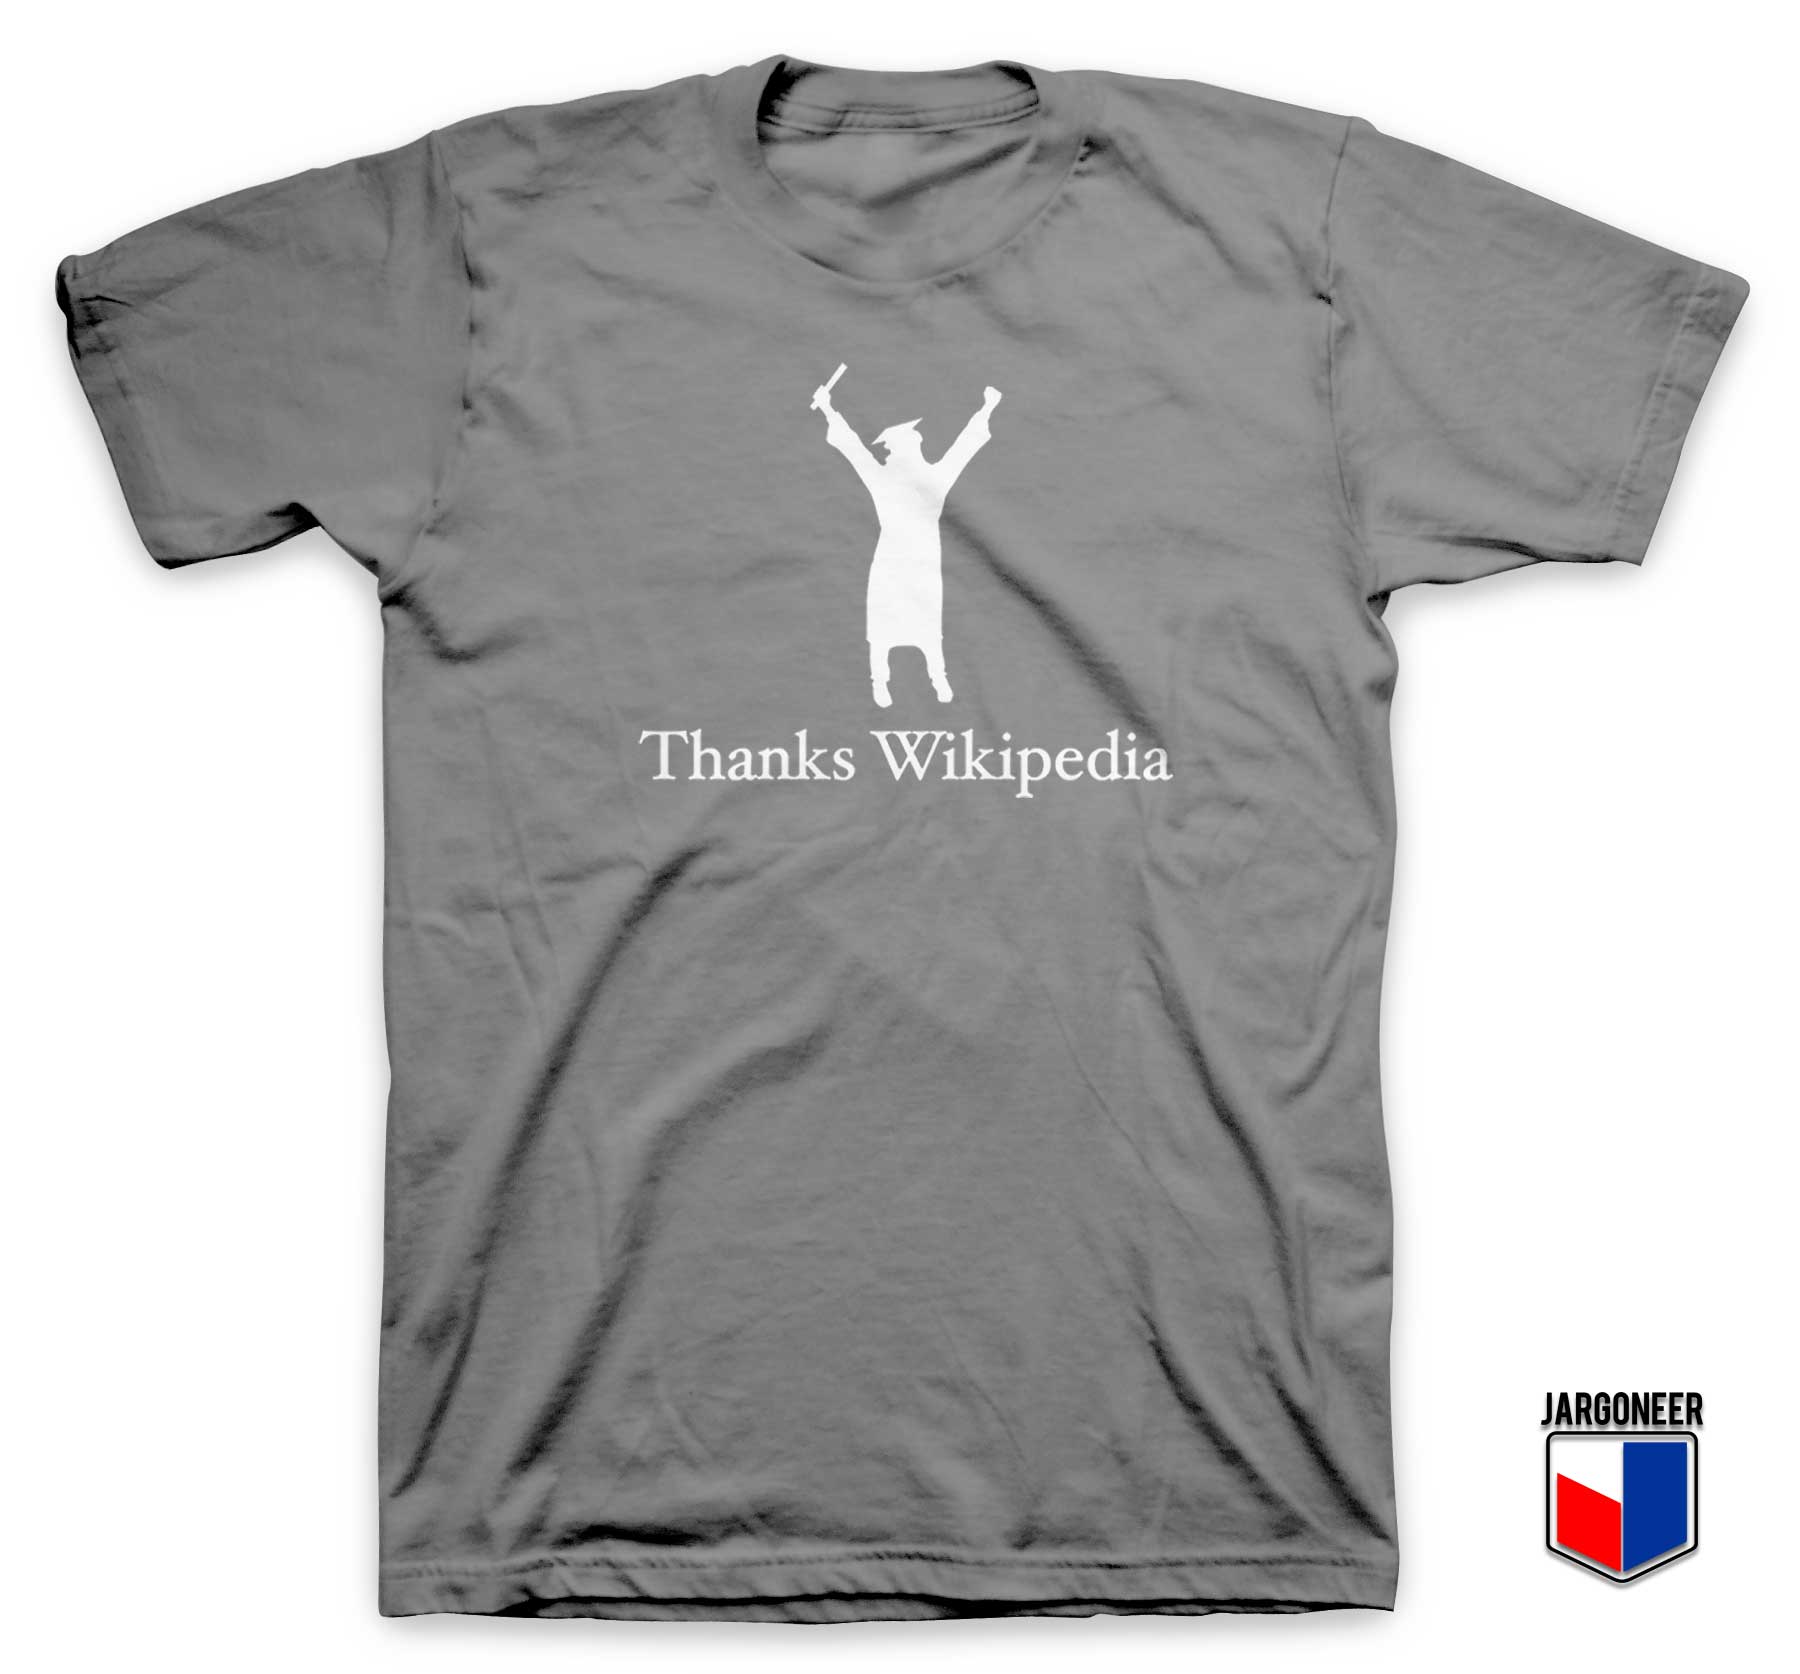 Thanks Wikipedia Gray T Shirt - Shop Unique Graphic Cool Shirt Designs